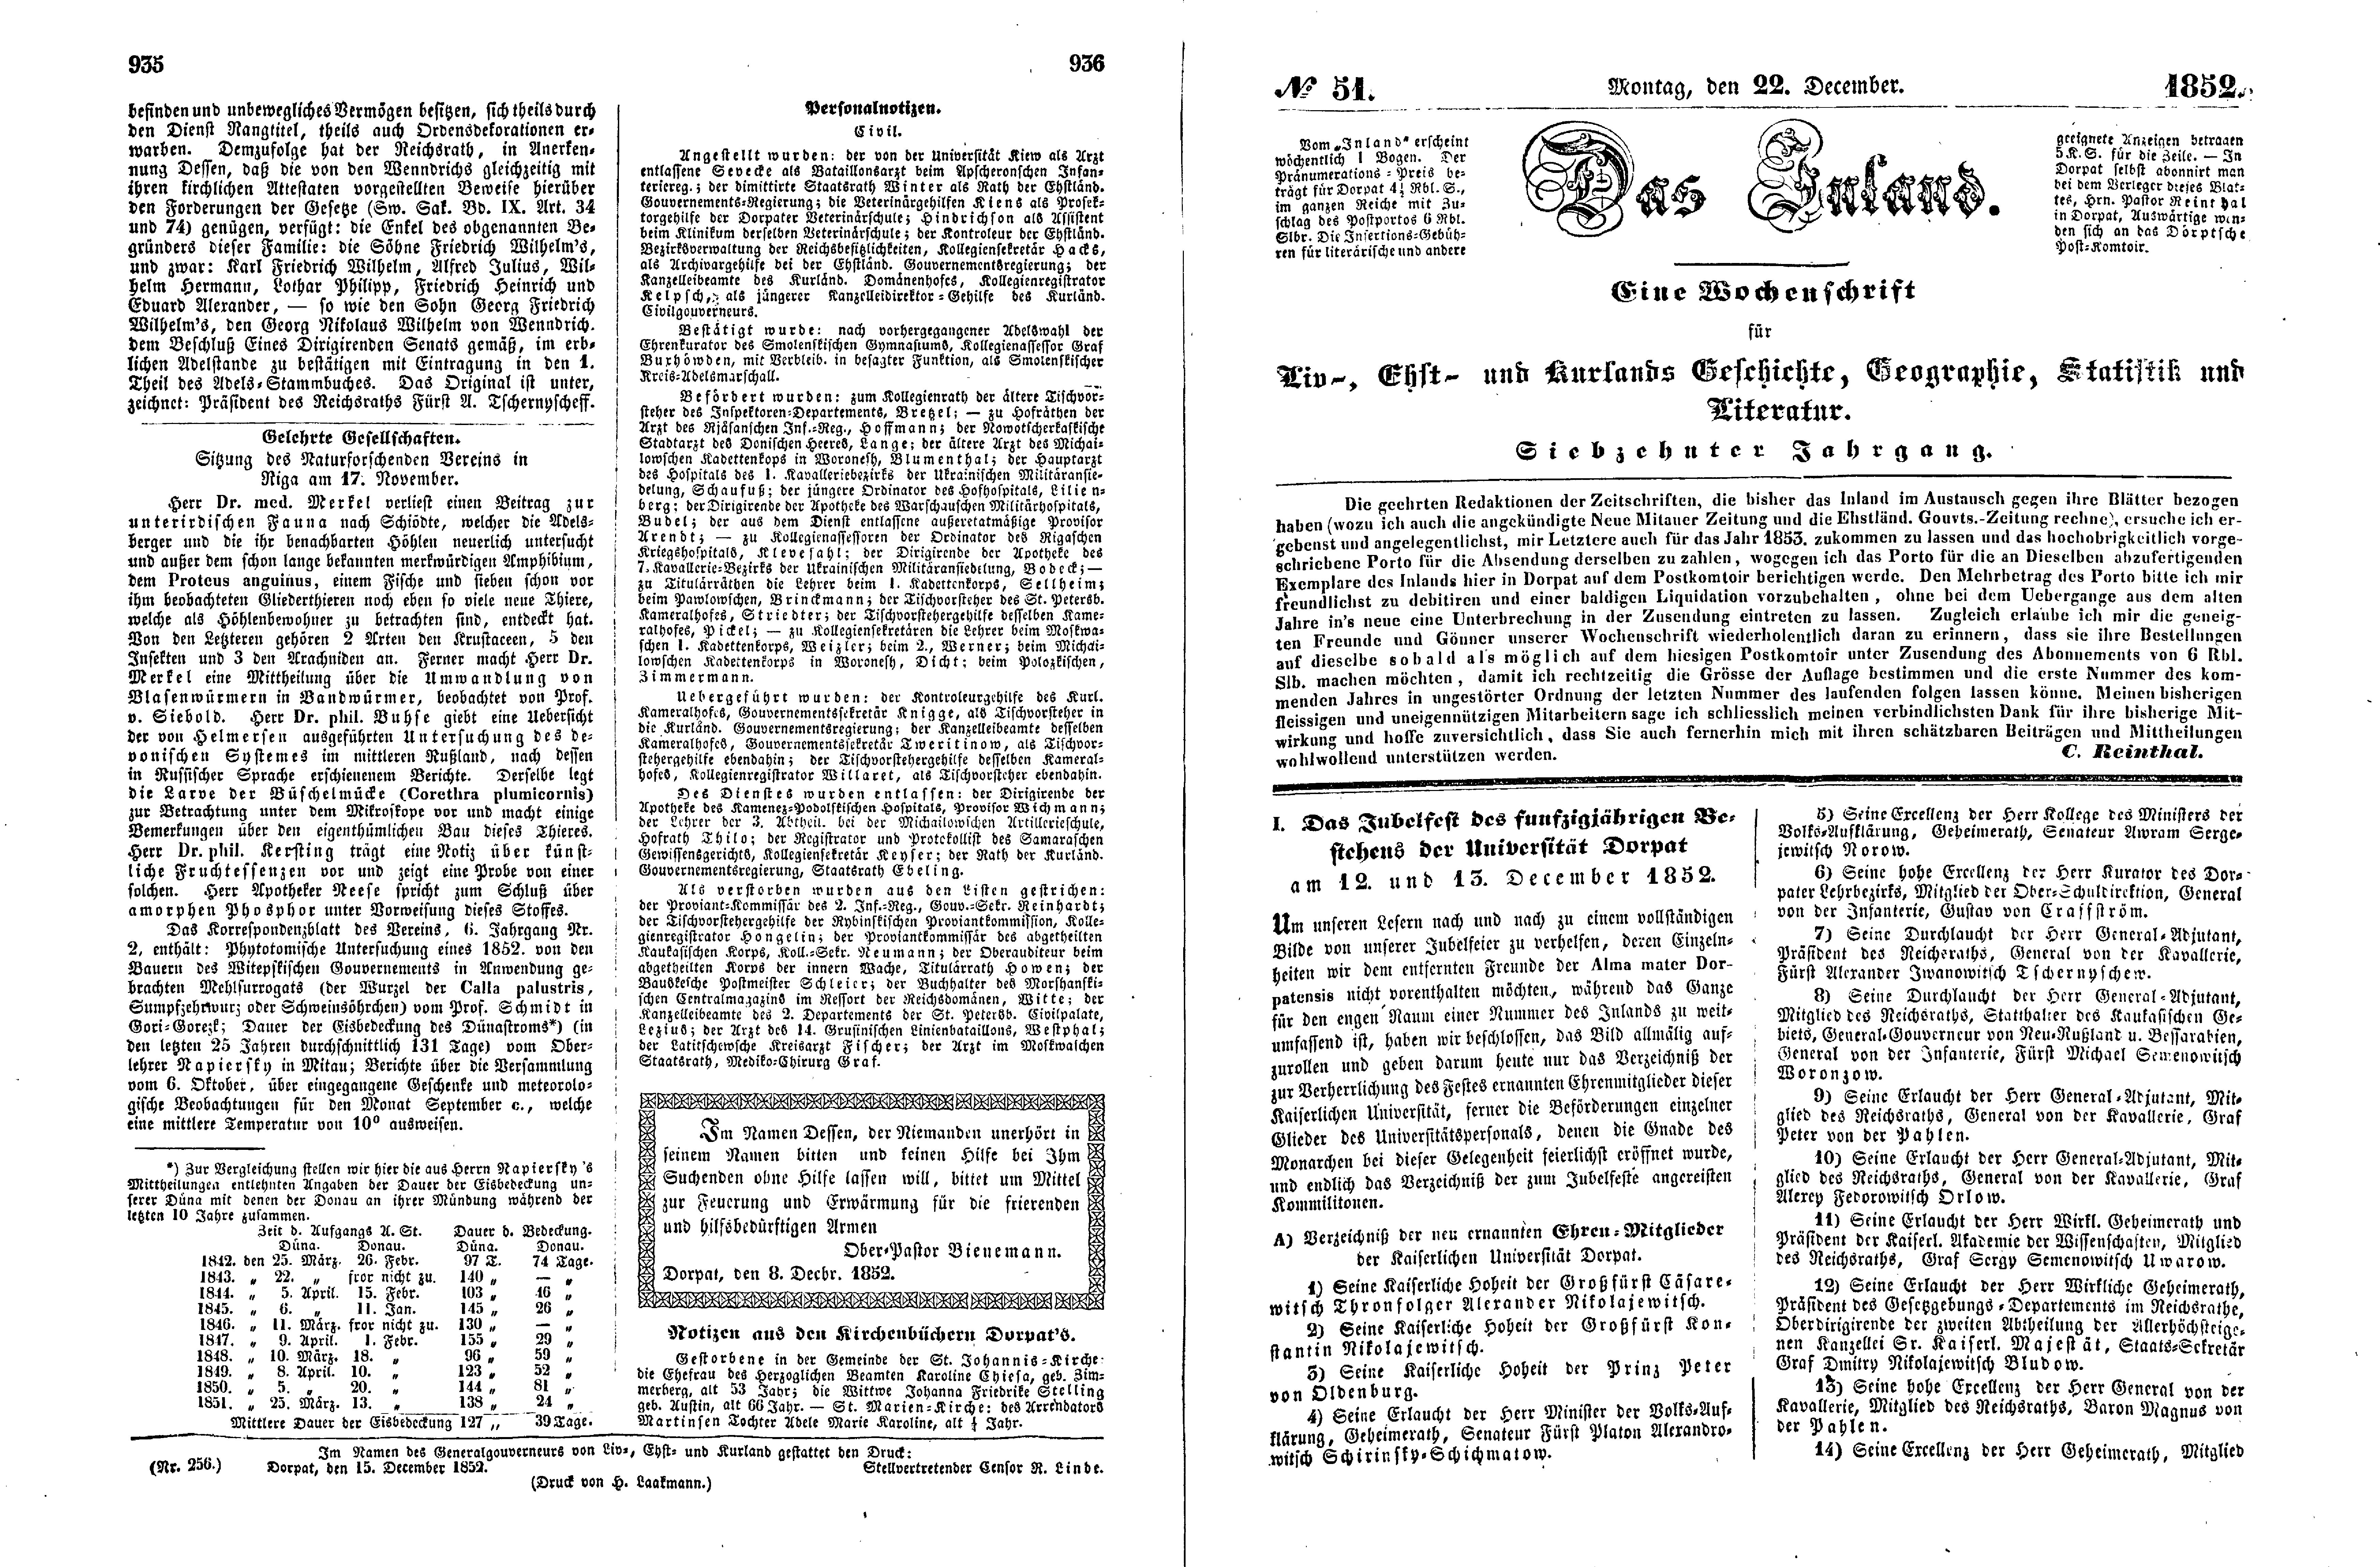 Das Inland [17] (1852) | 239. (935-938) Main body of text